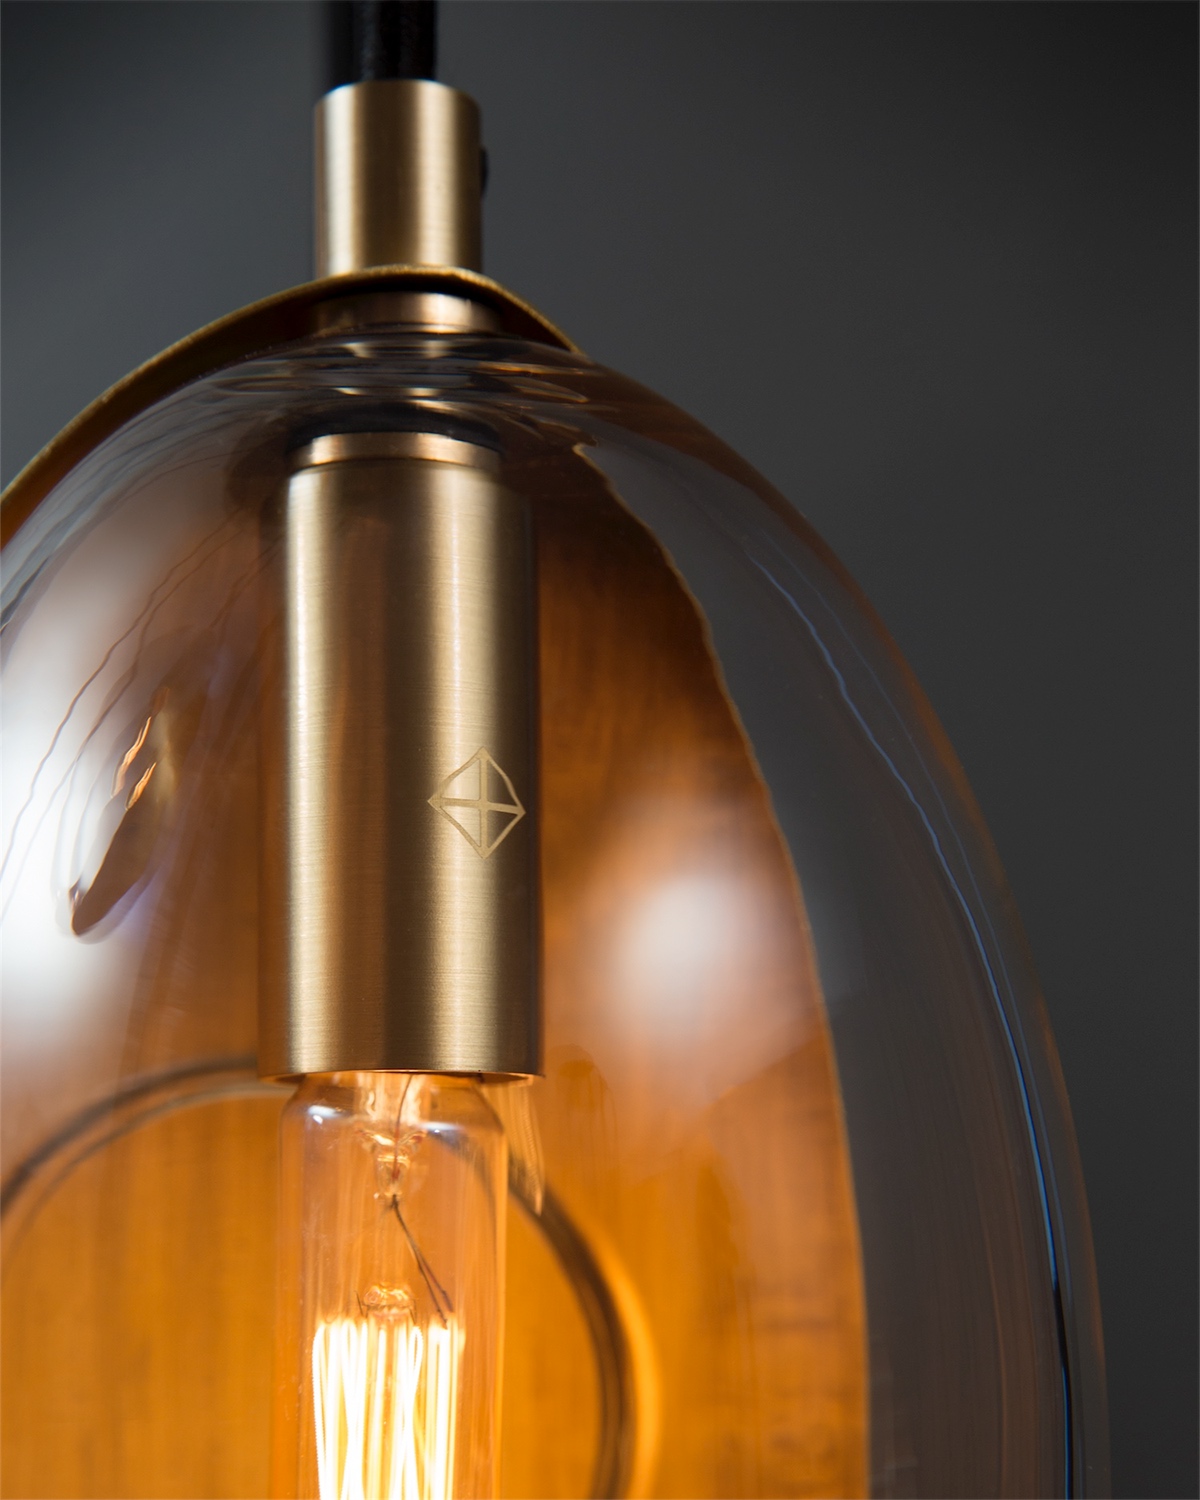 lighting light fixture light pendant brass glass edison bulb